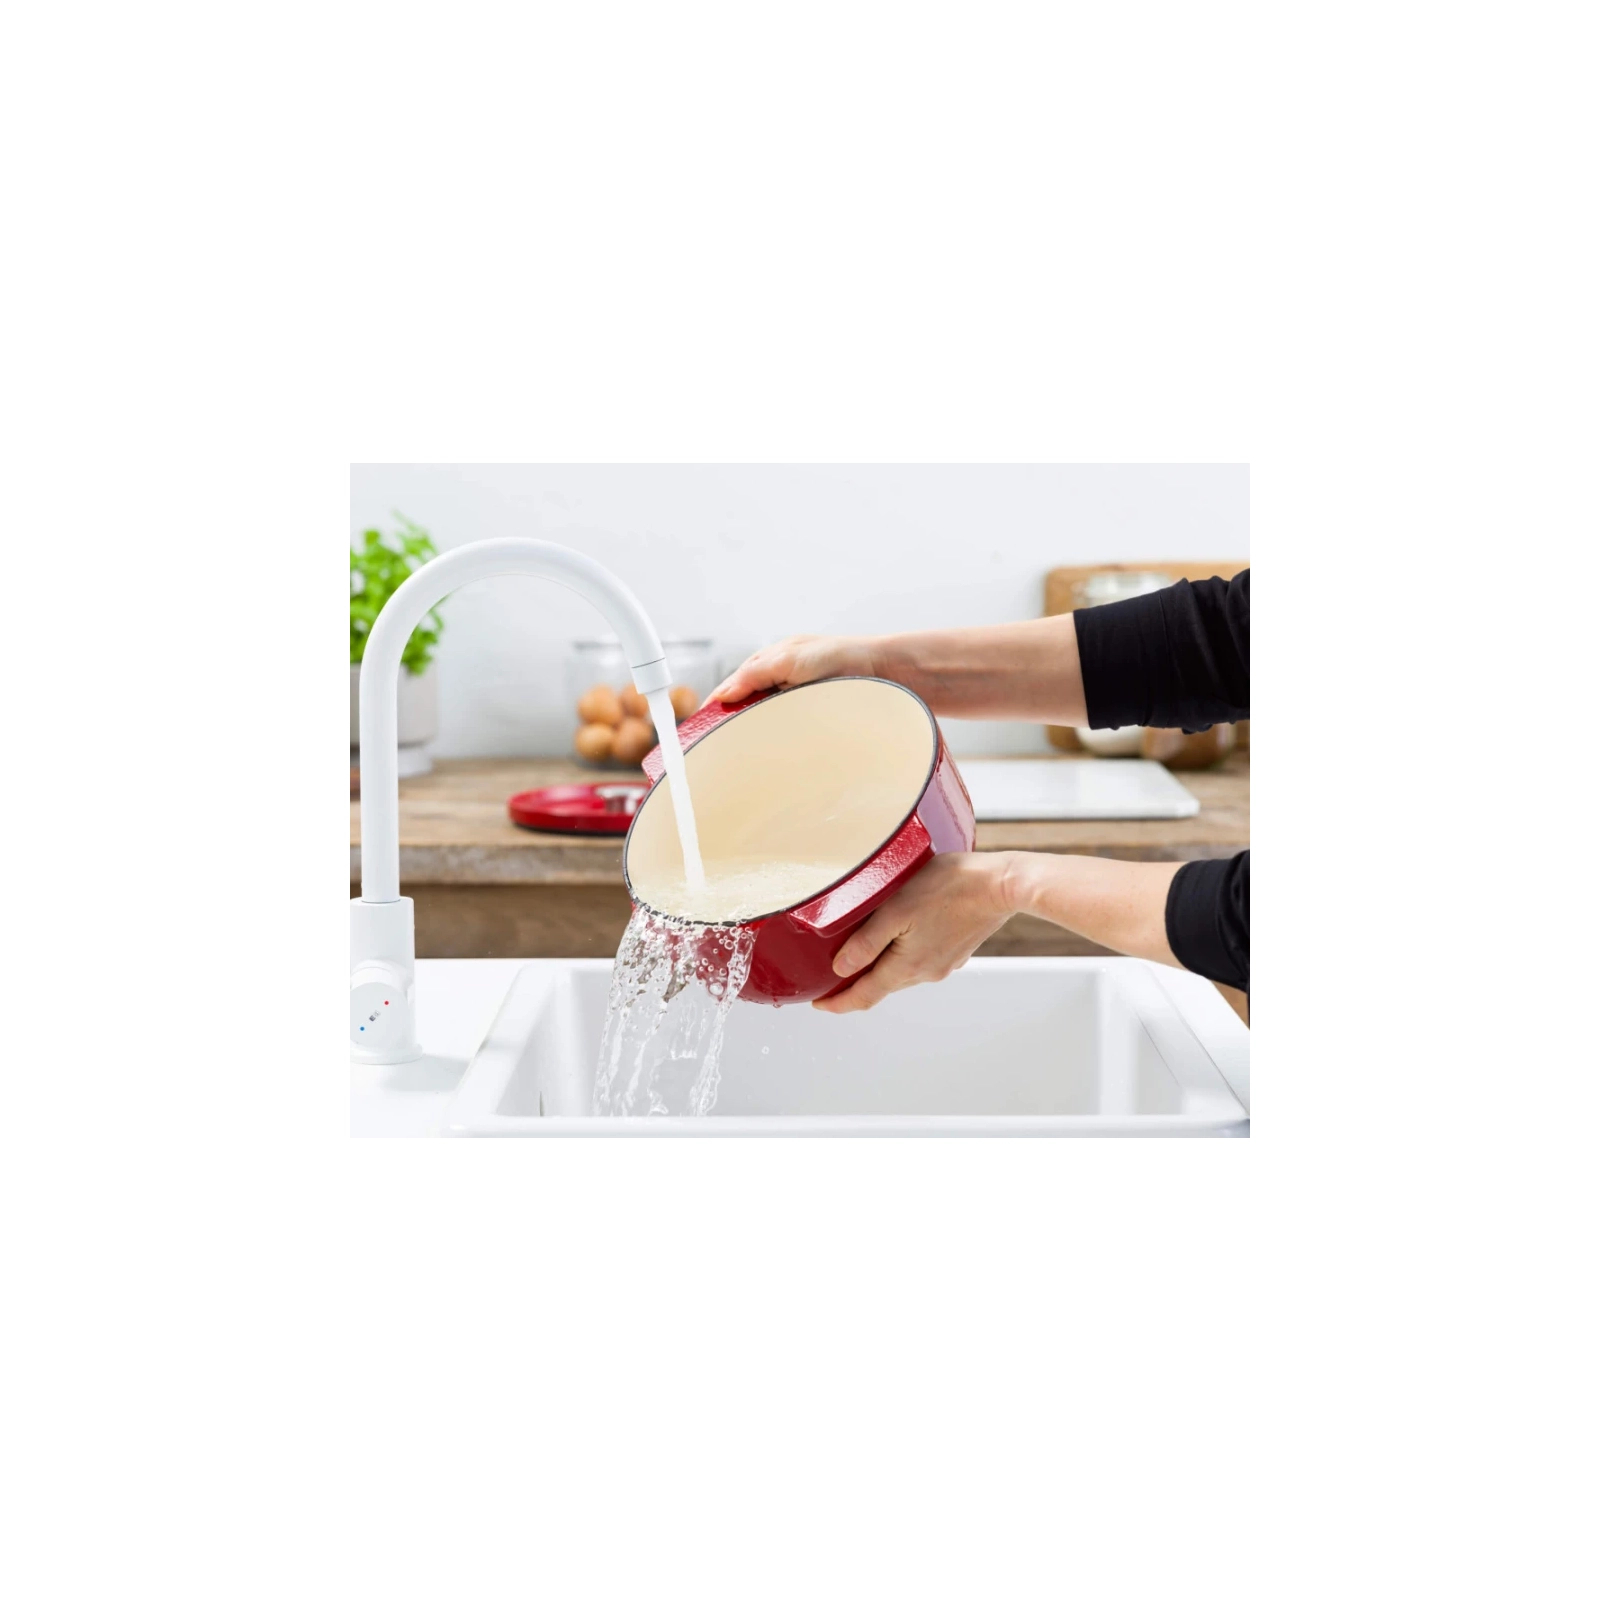 Кастрюля KitchenAid чавунна з кришкою 5,2 л Червона (CC006060-001) изображение 9